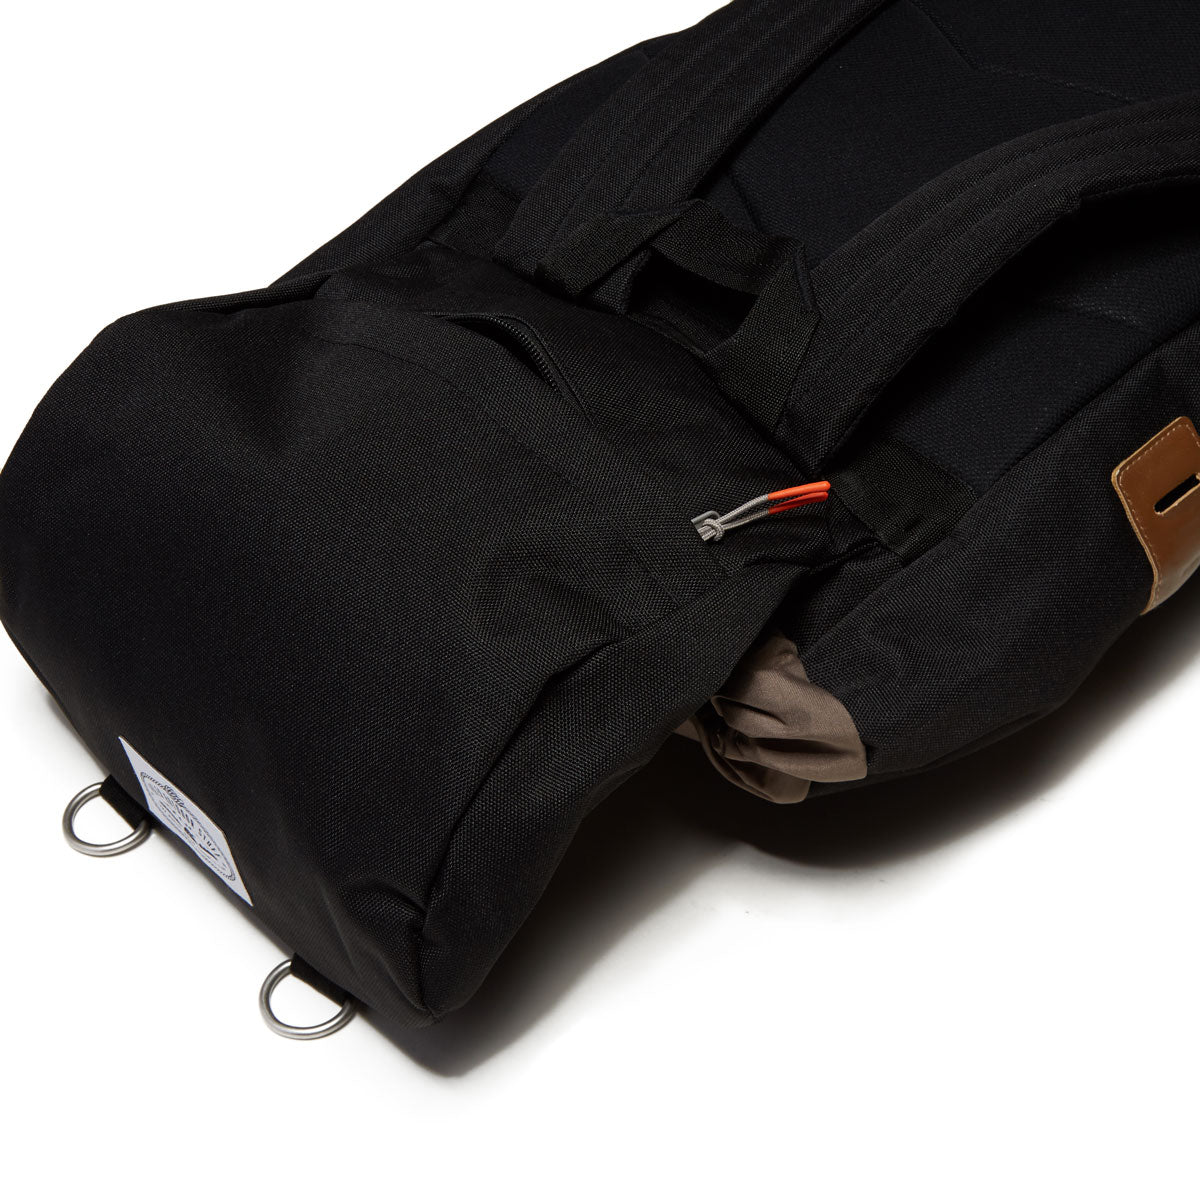 Poler Classic Rucksack Backpack - Black image 4